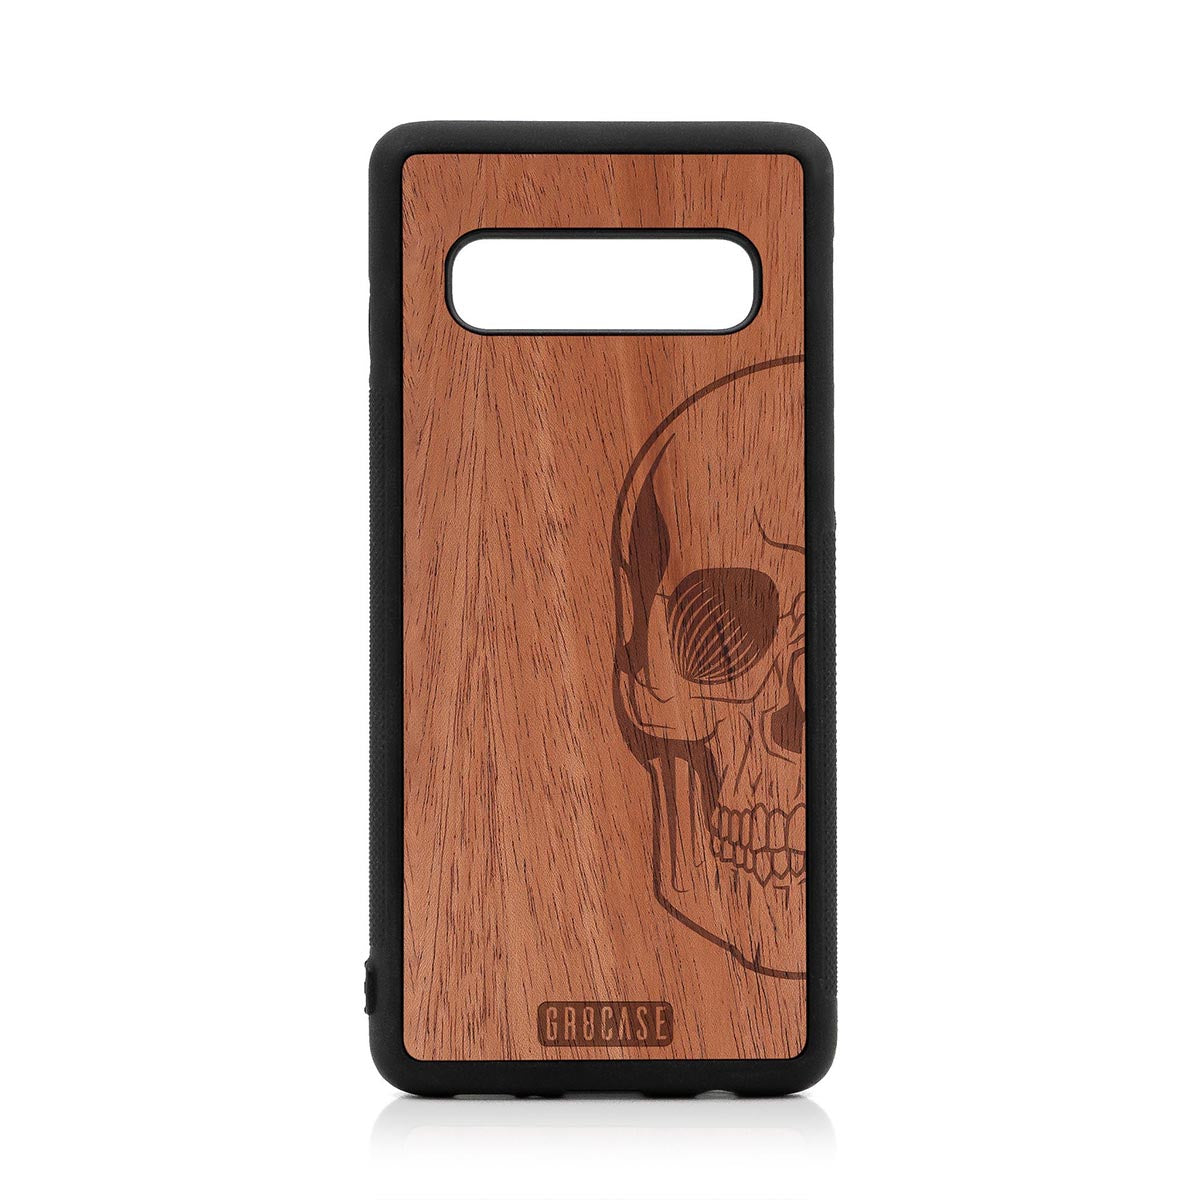 Half Skull Design Wood Case For Samsung Galaxy S10 by GR8CASE